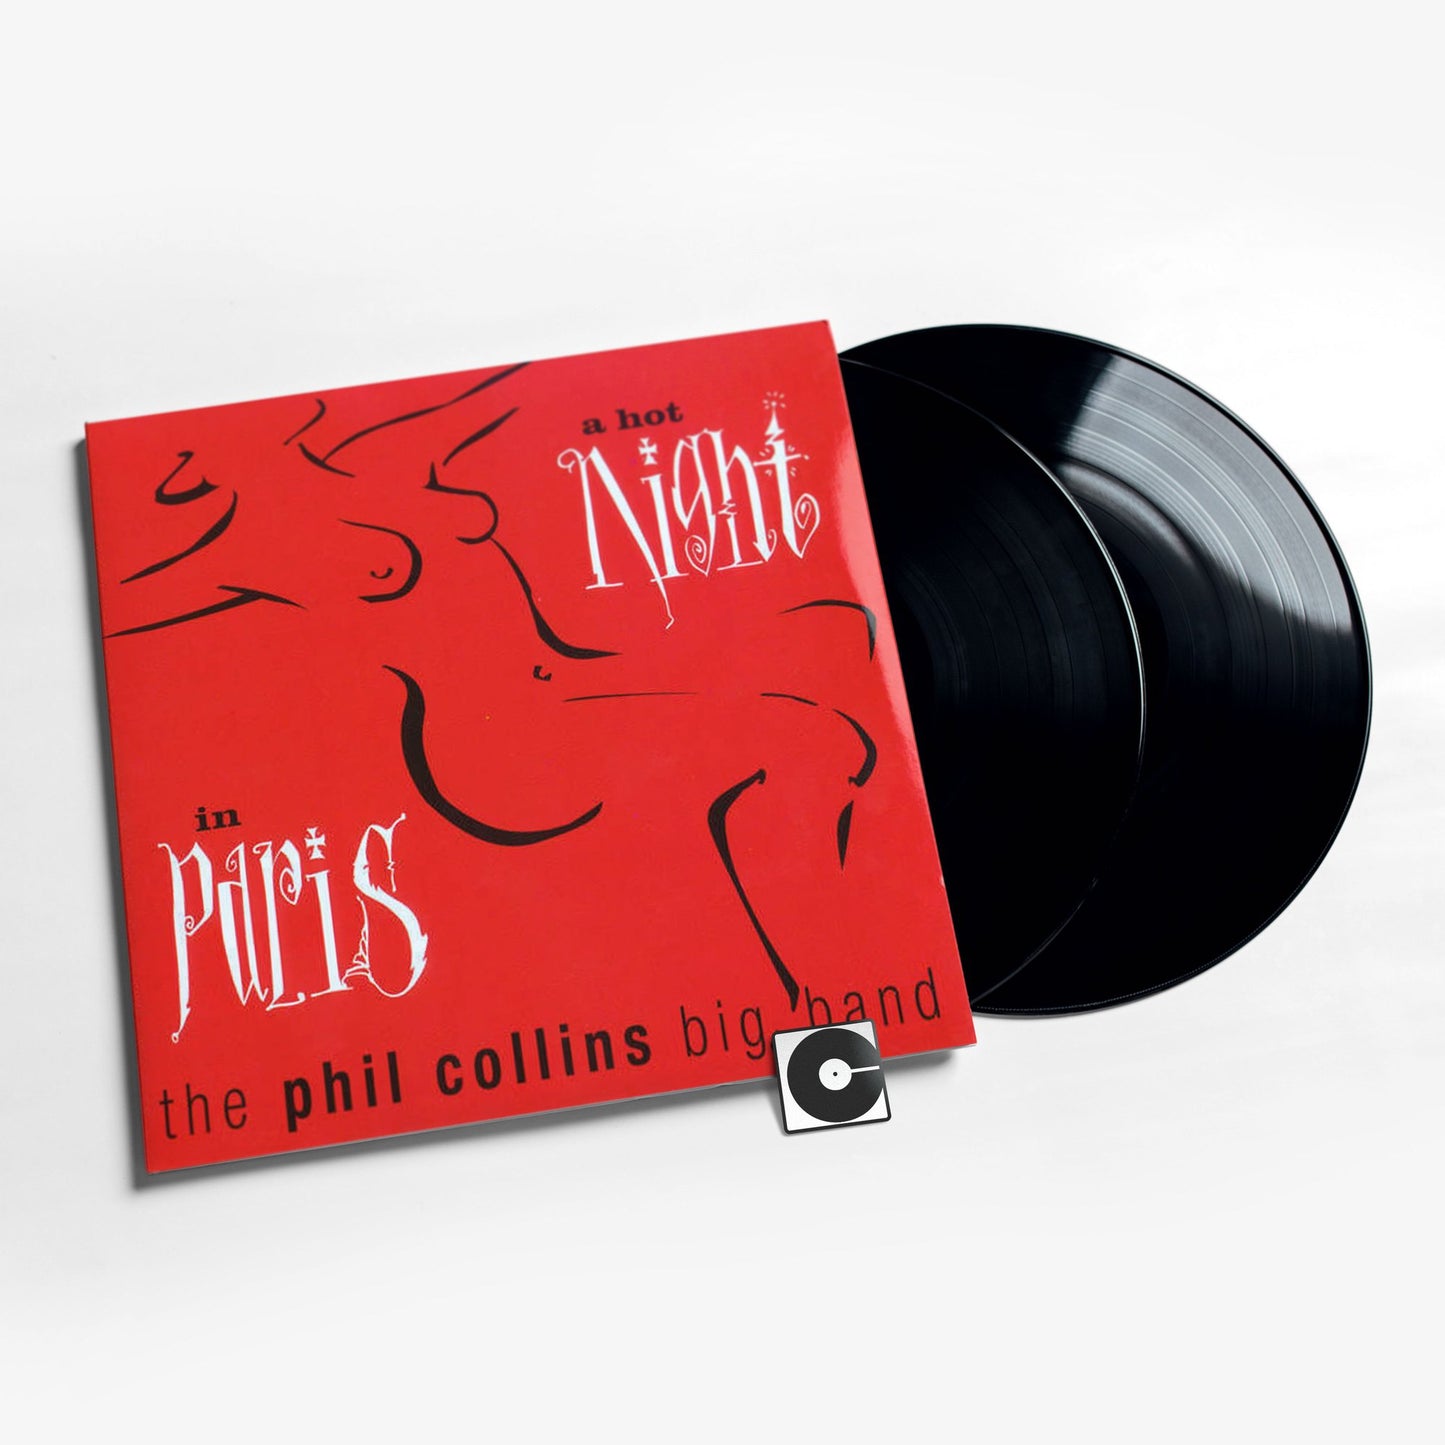 Phil Collins - "A Hot Night In Paris"